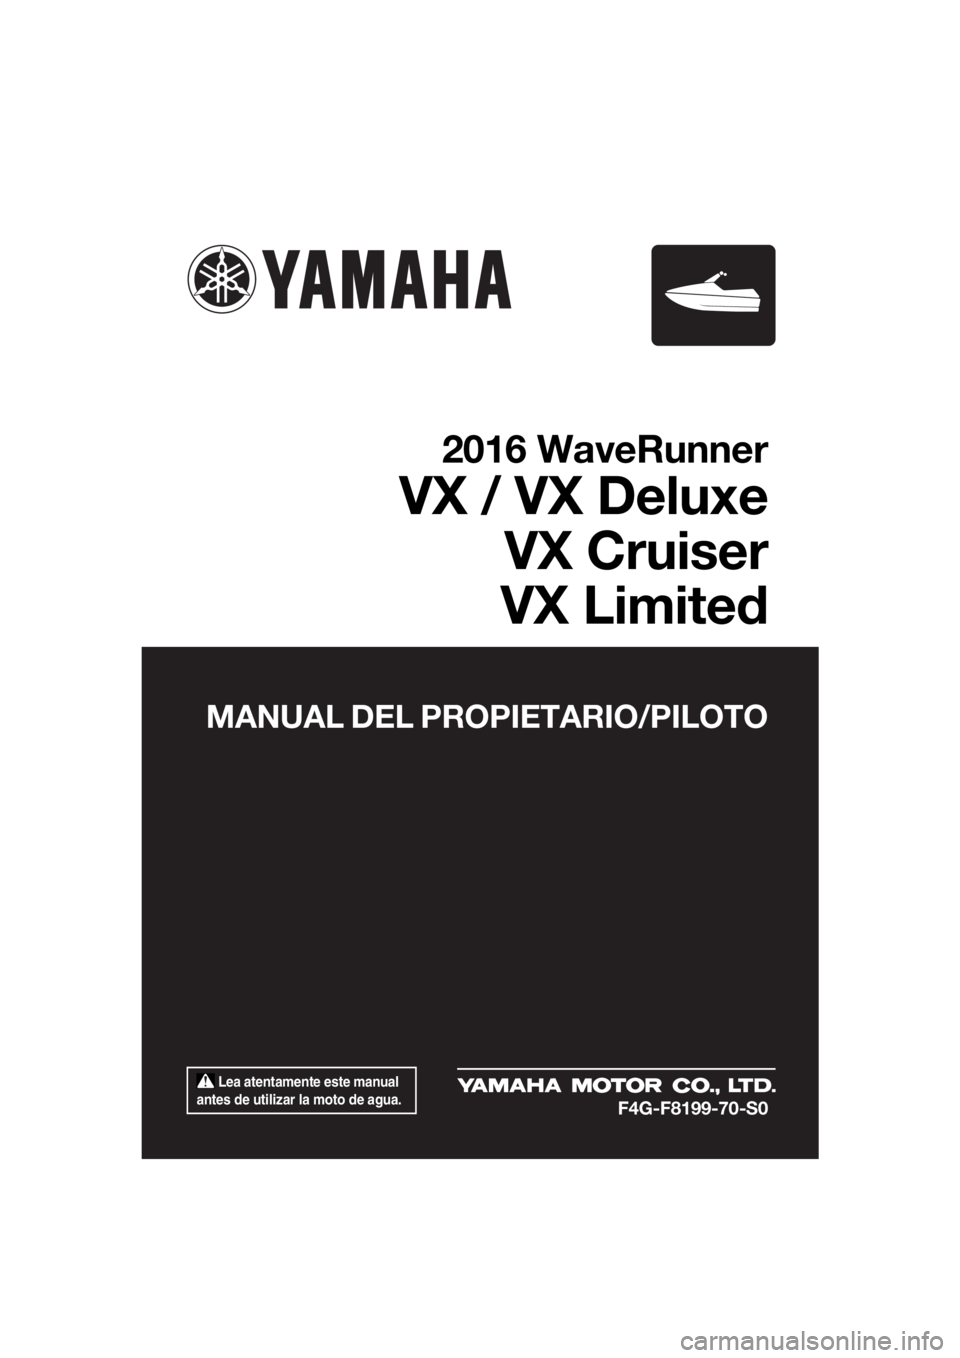 YAMAHA VX 2016  Manuale de Empleo (in Spanish)  Lea atentamente este manual 
antes de utilizar la moto de agua.
MANUAL DEL PROPIETARIO/PILOTO
2016 WaveRunner
VX / VX Deluxe
VX Cruiser
VX Limited
F4G-F8199-70-S0
UF4G70S0.book  Page 1  Monday, Septe